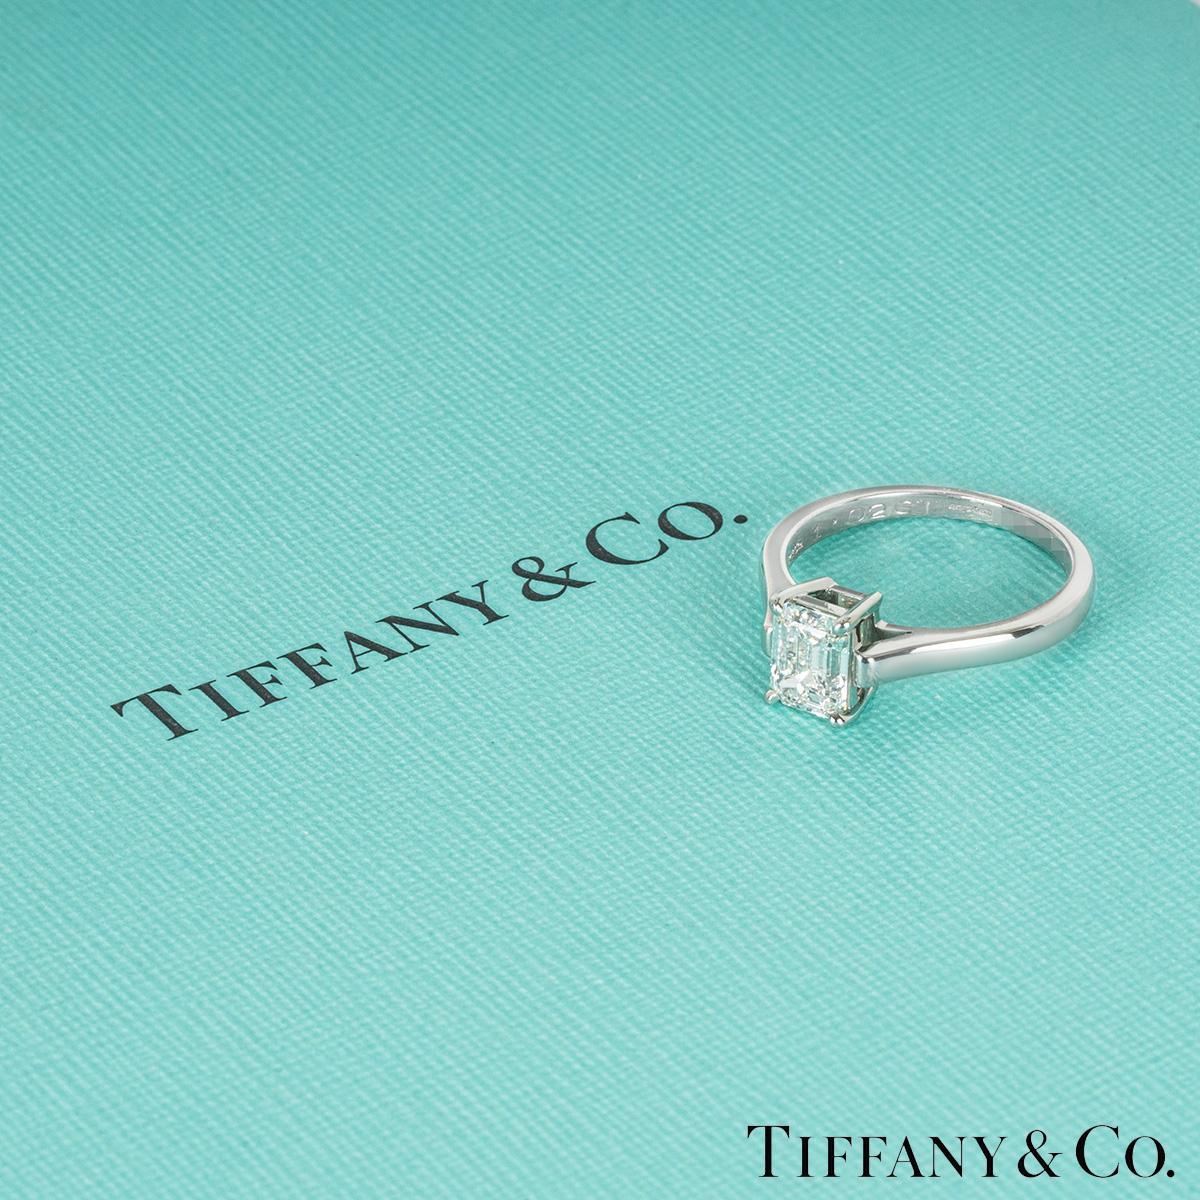 Tiffany & Co. Platinum Emerald Cut Diamond Engagement Ring 1.02ct I/VVS2 For Sale 2